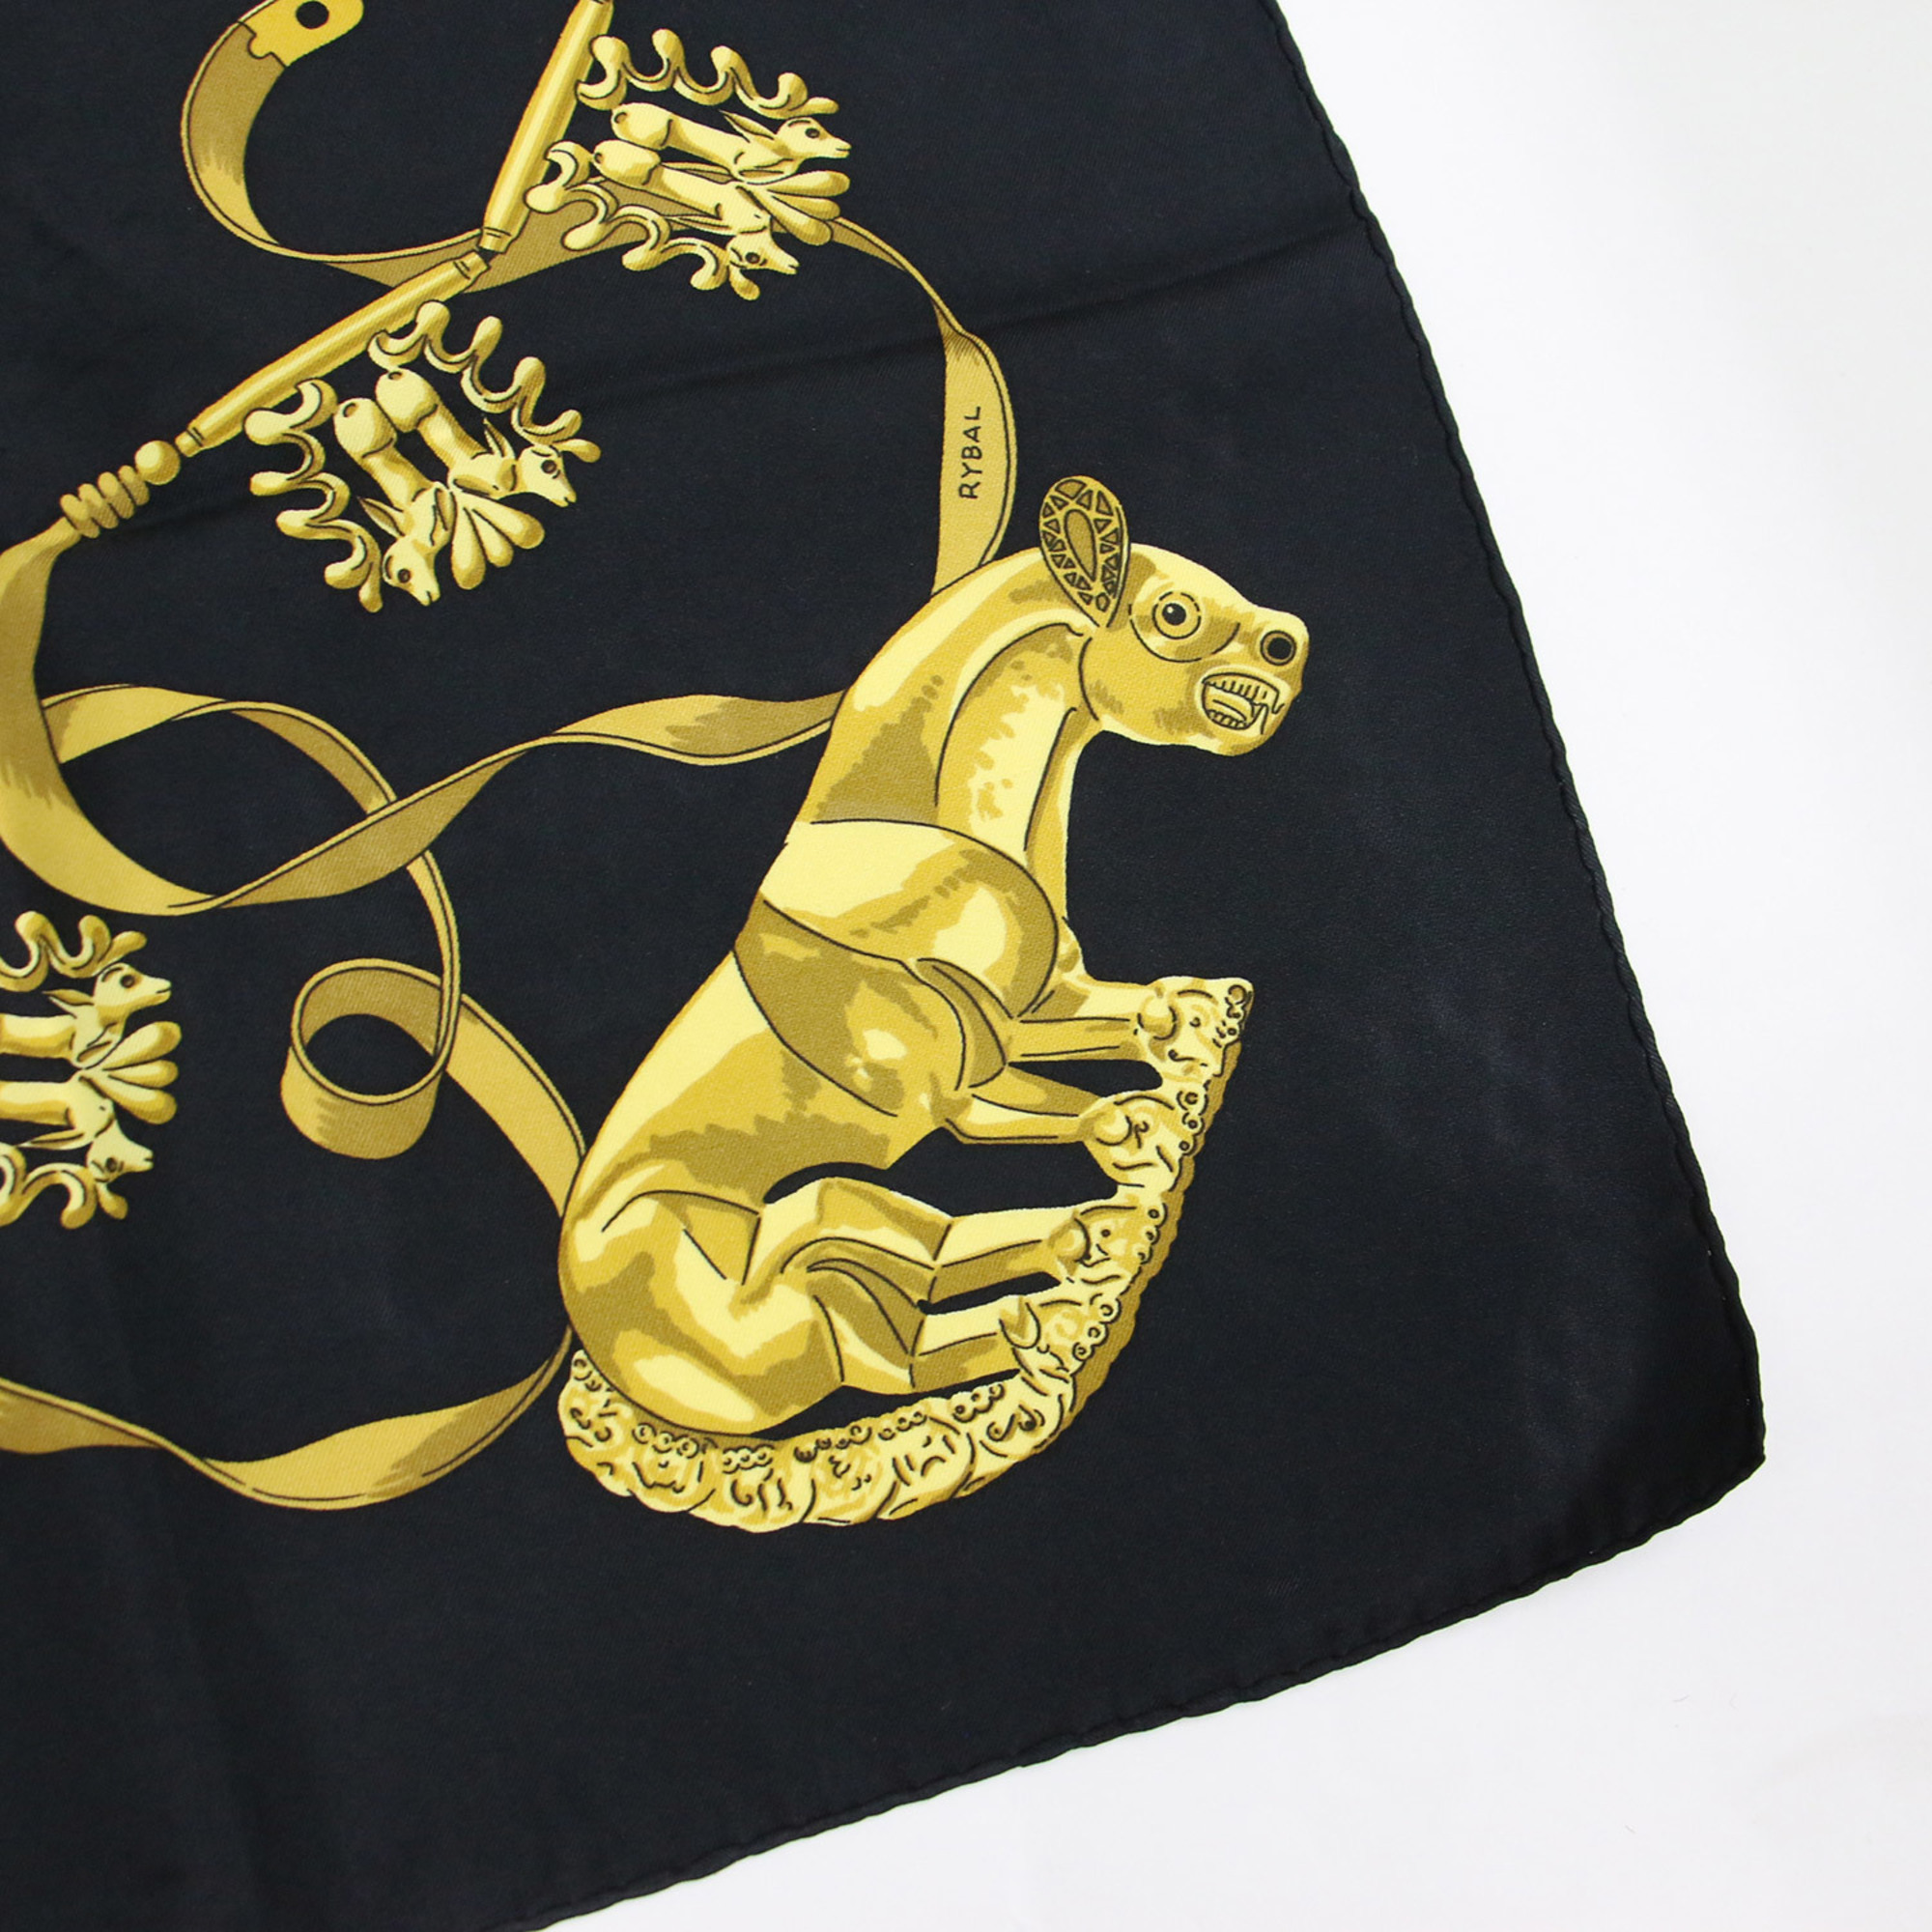 HERMES Carre 90 Scarf Muffler Large Print LES CAVALIERS DOR Golden Knights Silk Black Gold Women's K4102